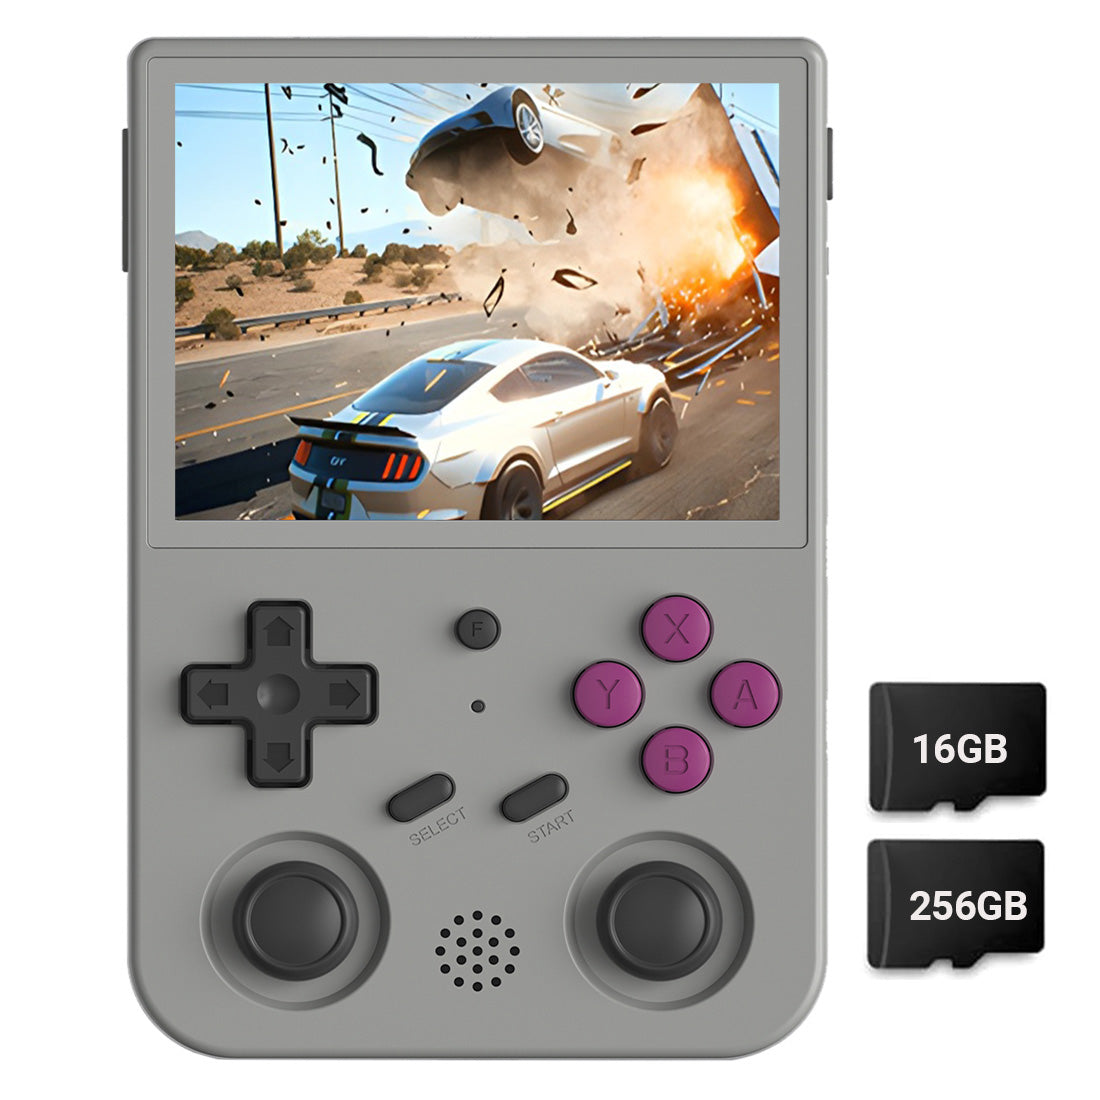 Anbernic RG353VS Handheld Game Console - Grey / 16GB+256GB